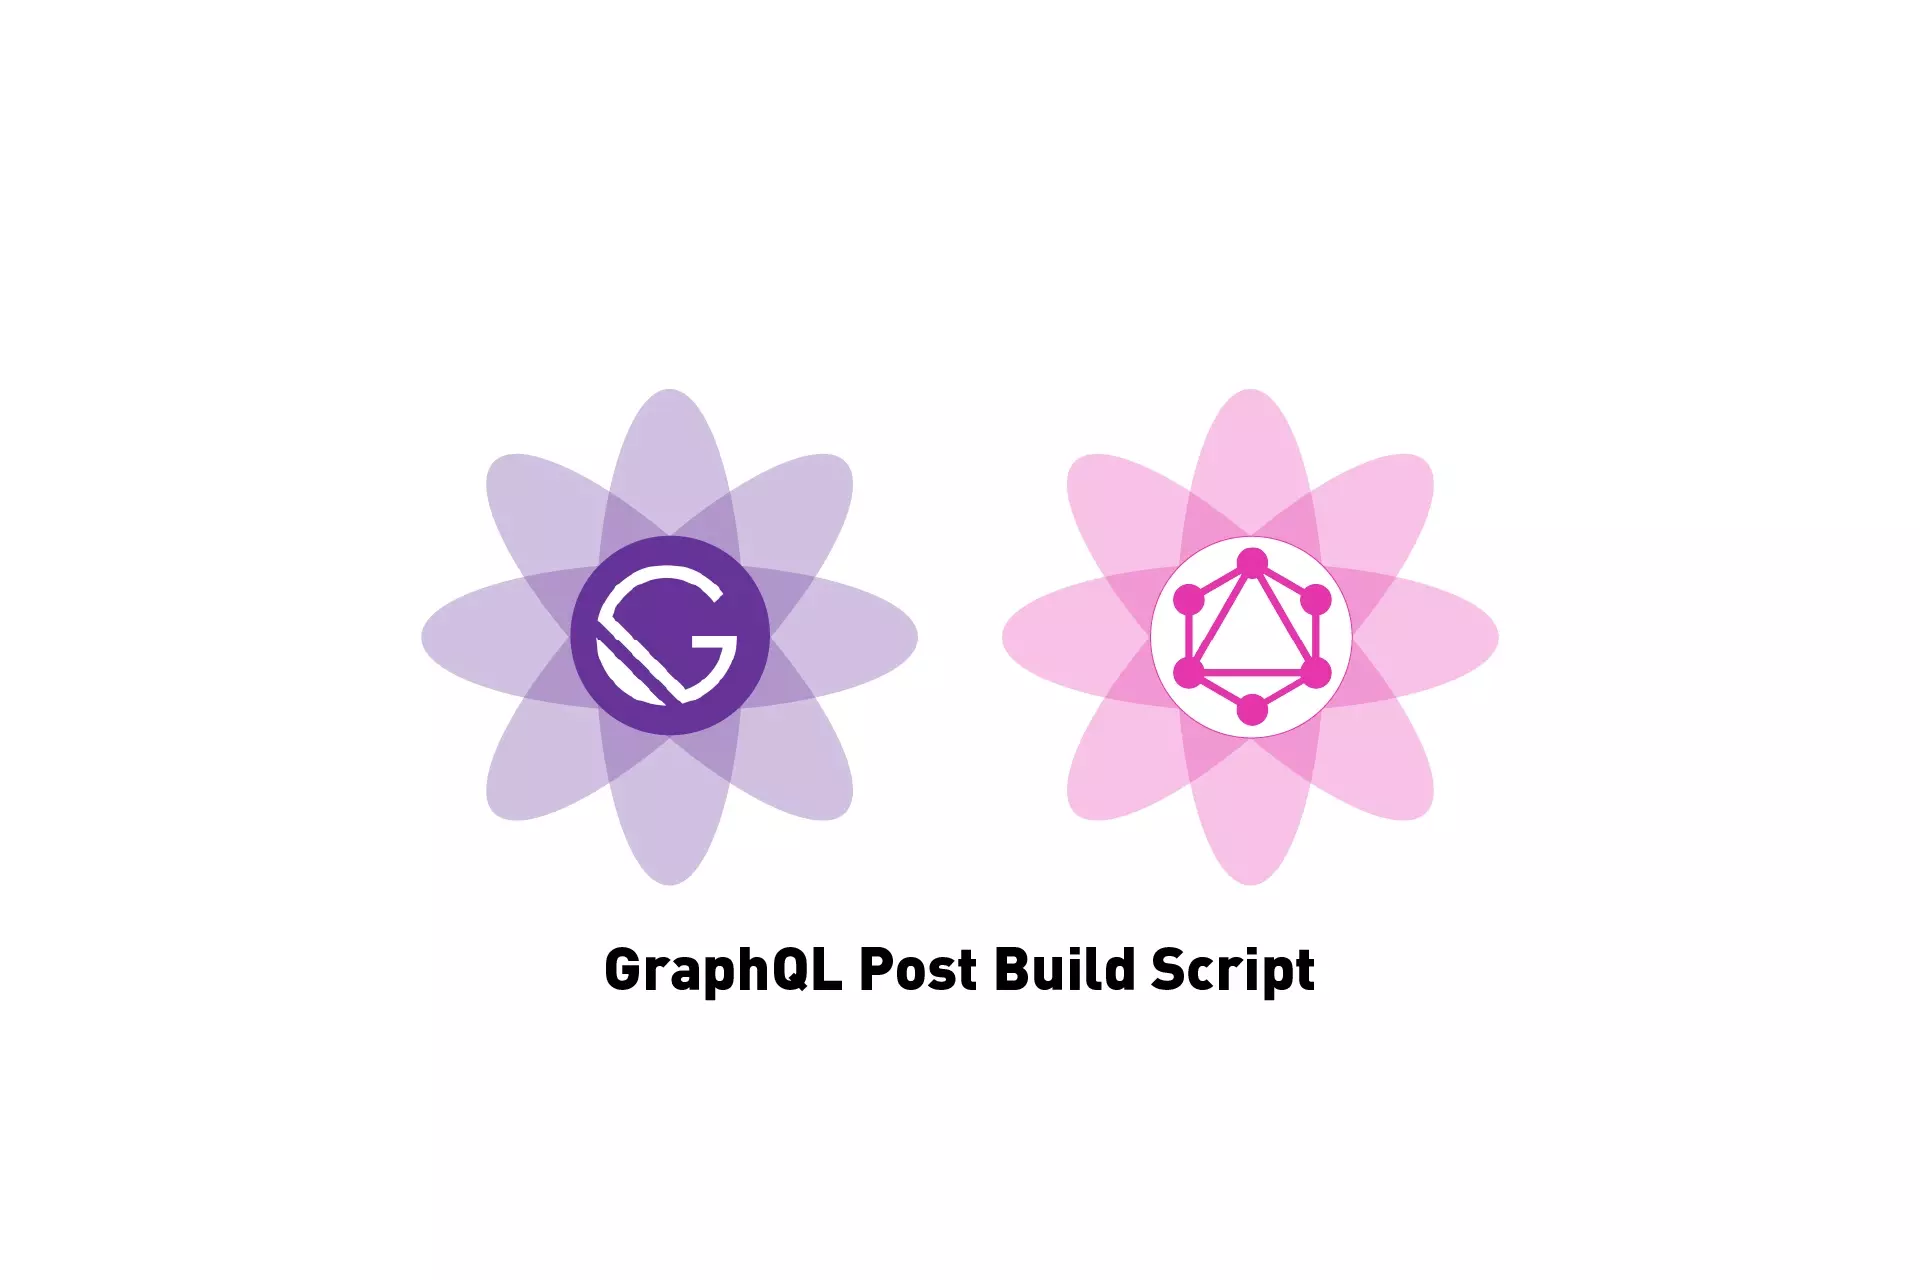 A flower that represents GatsbyJS next to one that represents GraphQL. Beneath it sits the text "GraphQL Post Build Script."